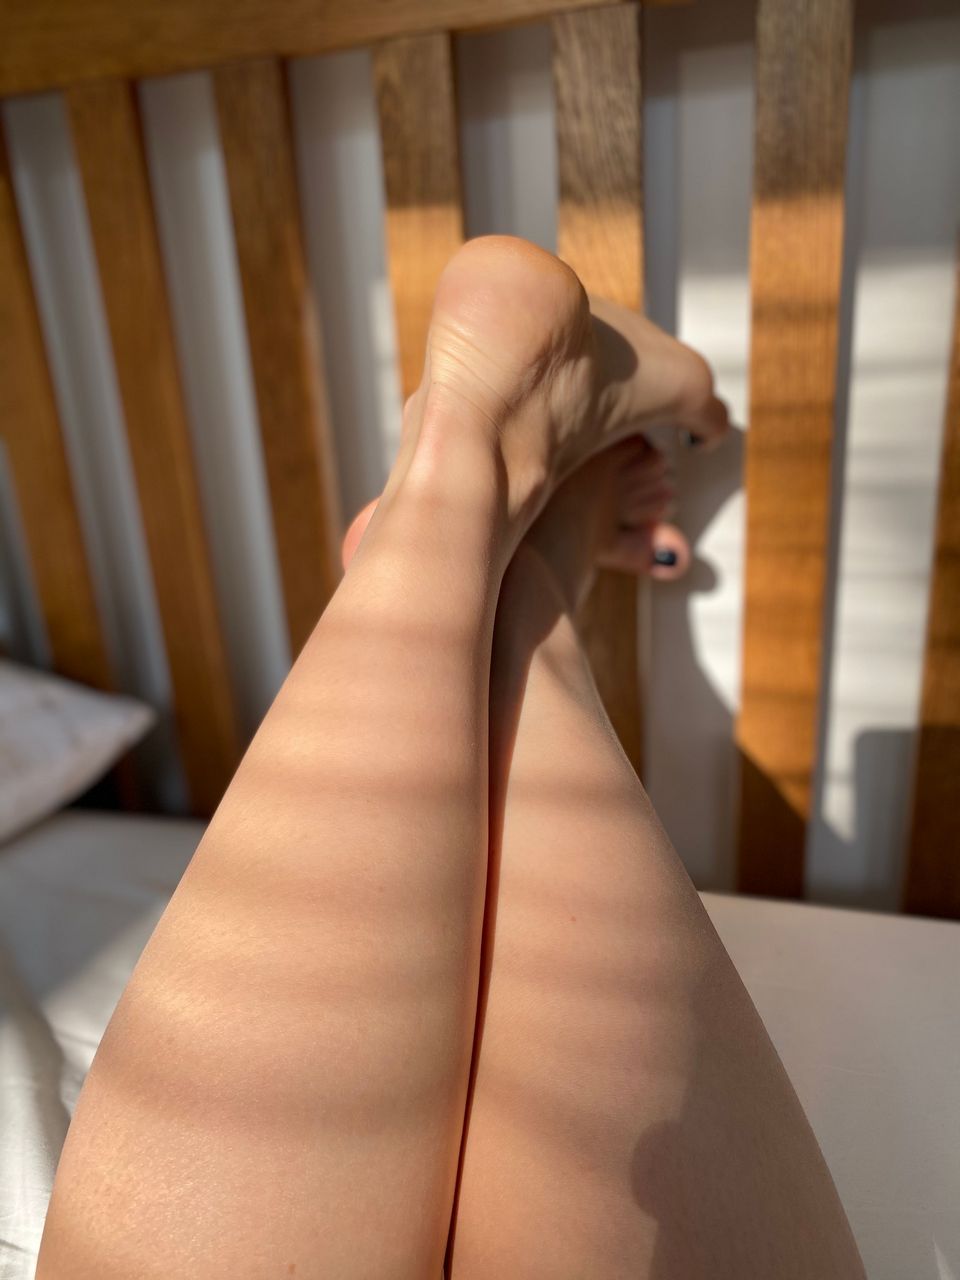 Chelle S Feet Feet In Bed